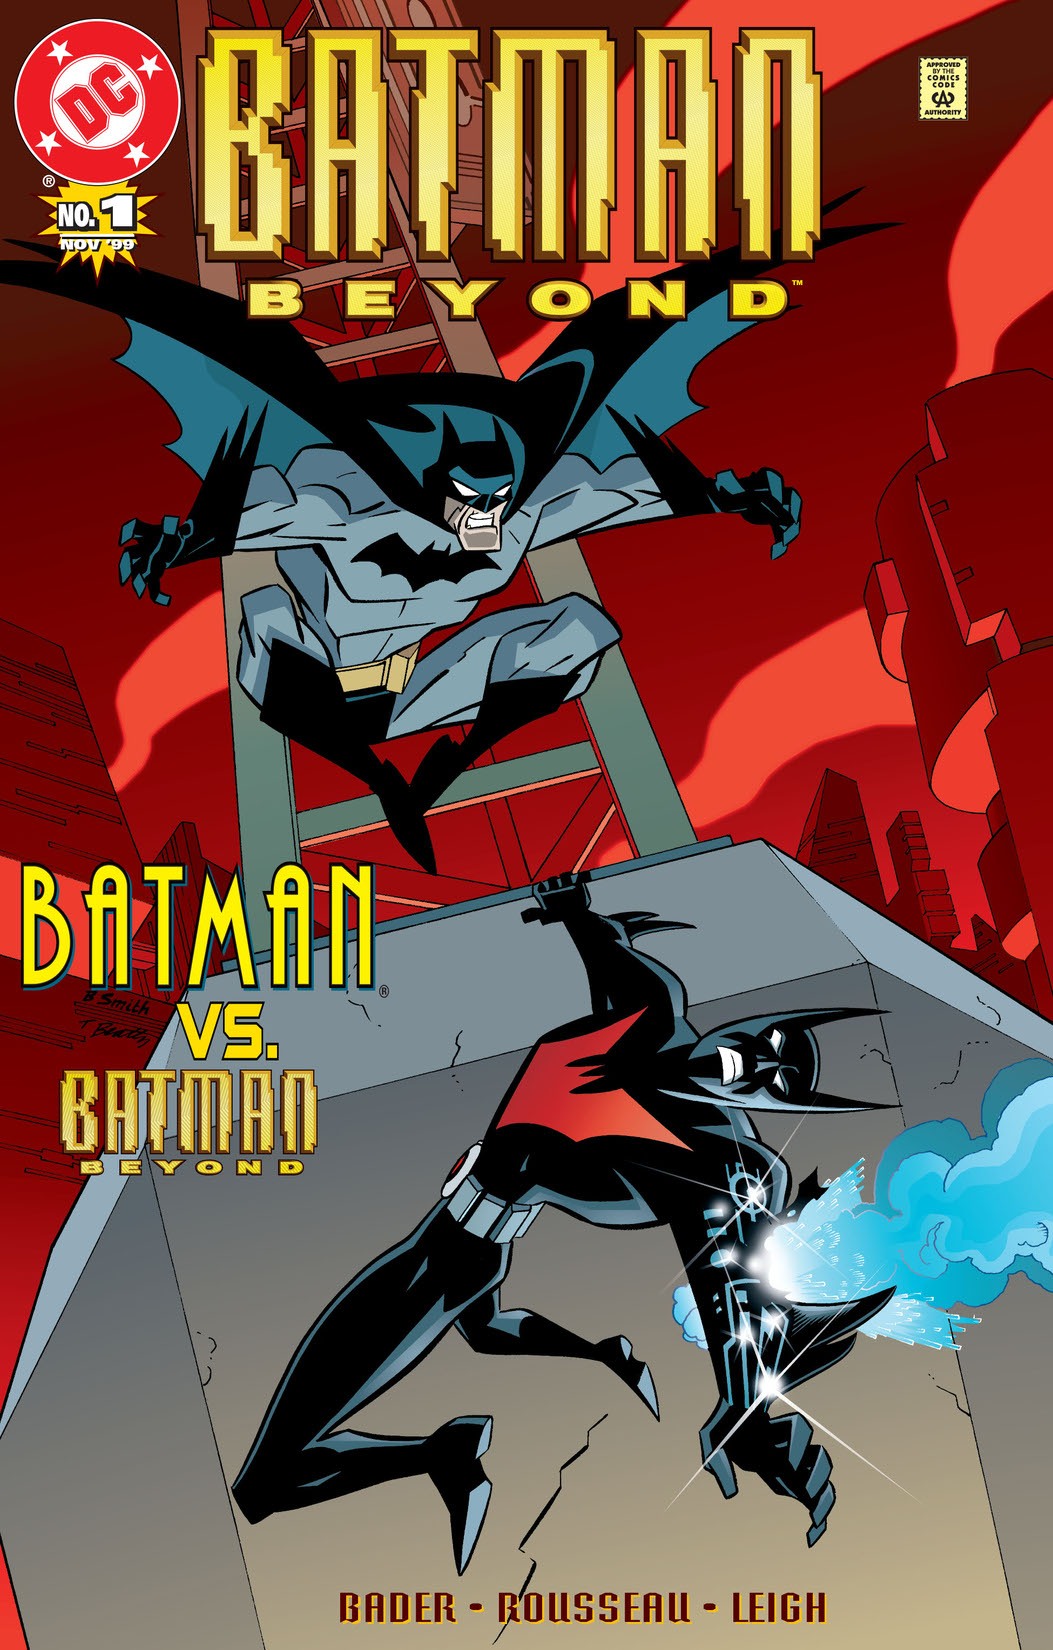 Batman Beyond (1999-) #1 preview images